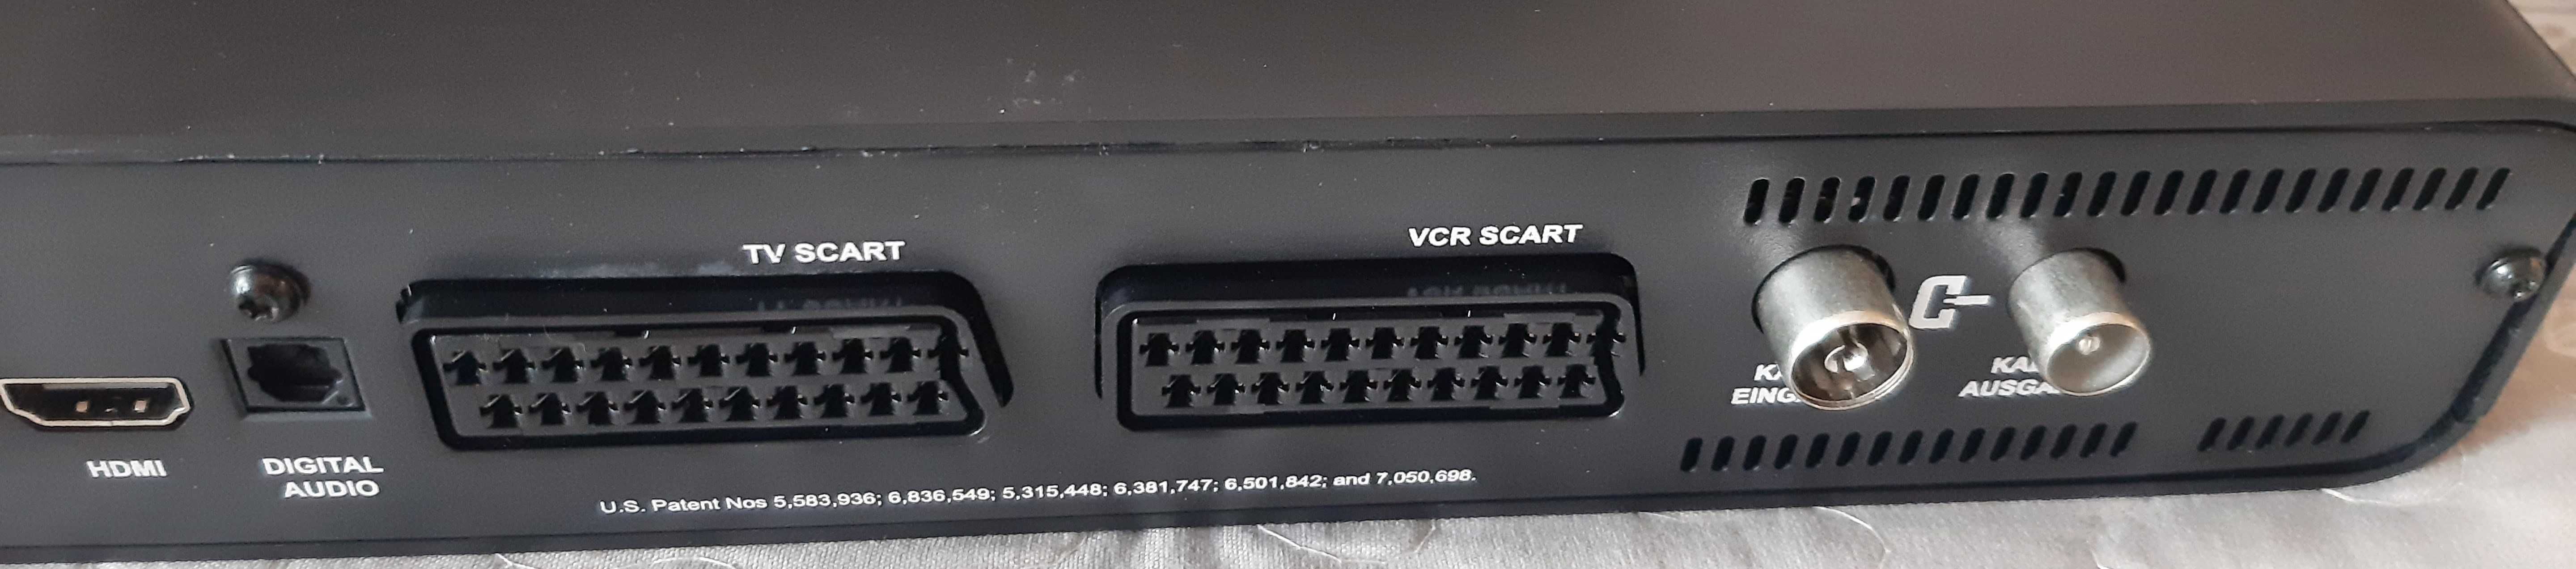 HD-Video-Recorder Sagemcom RCI88-320 KDG